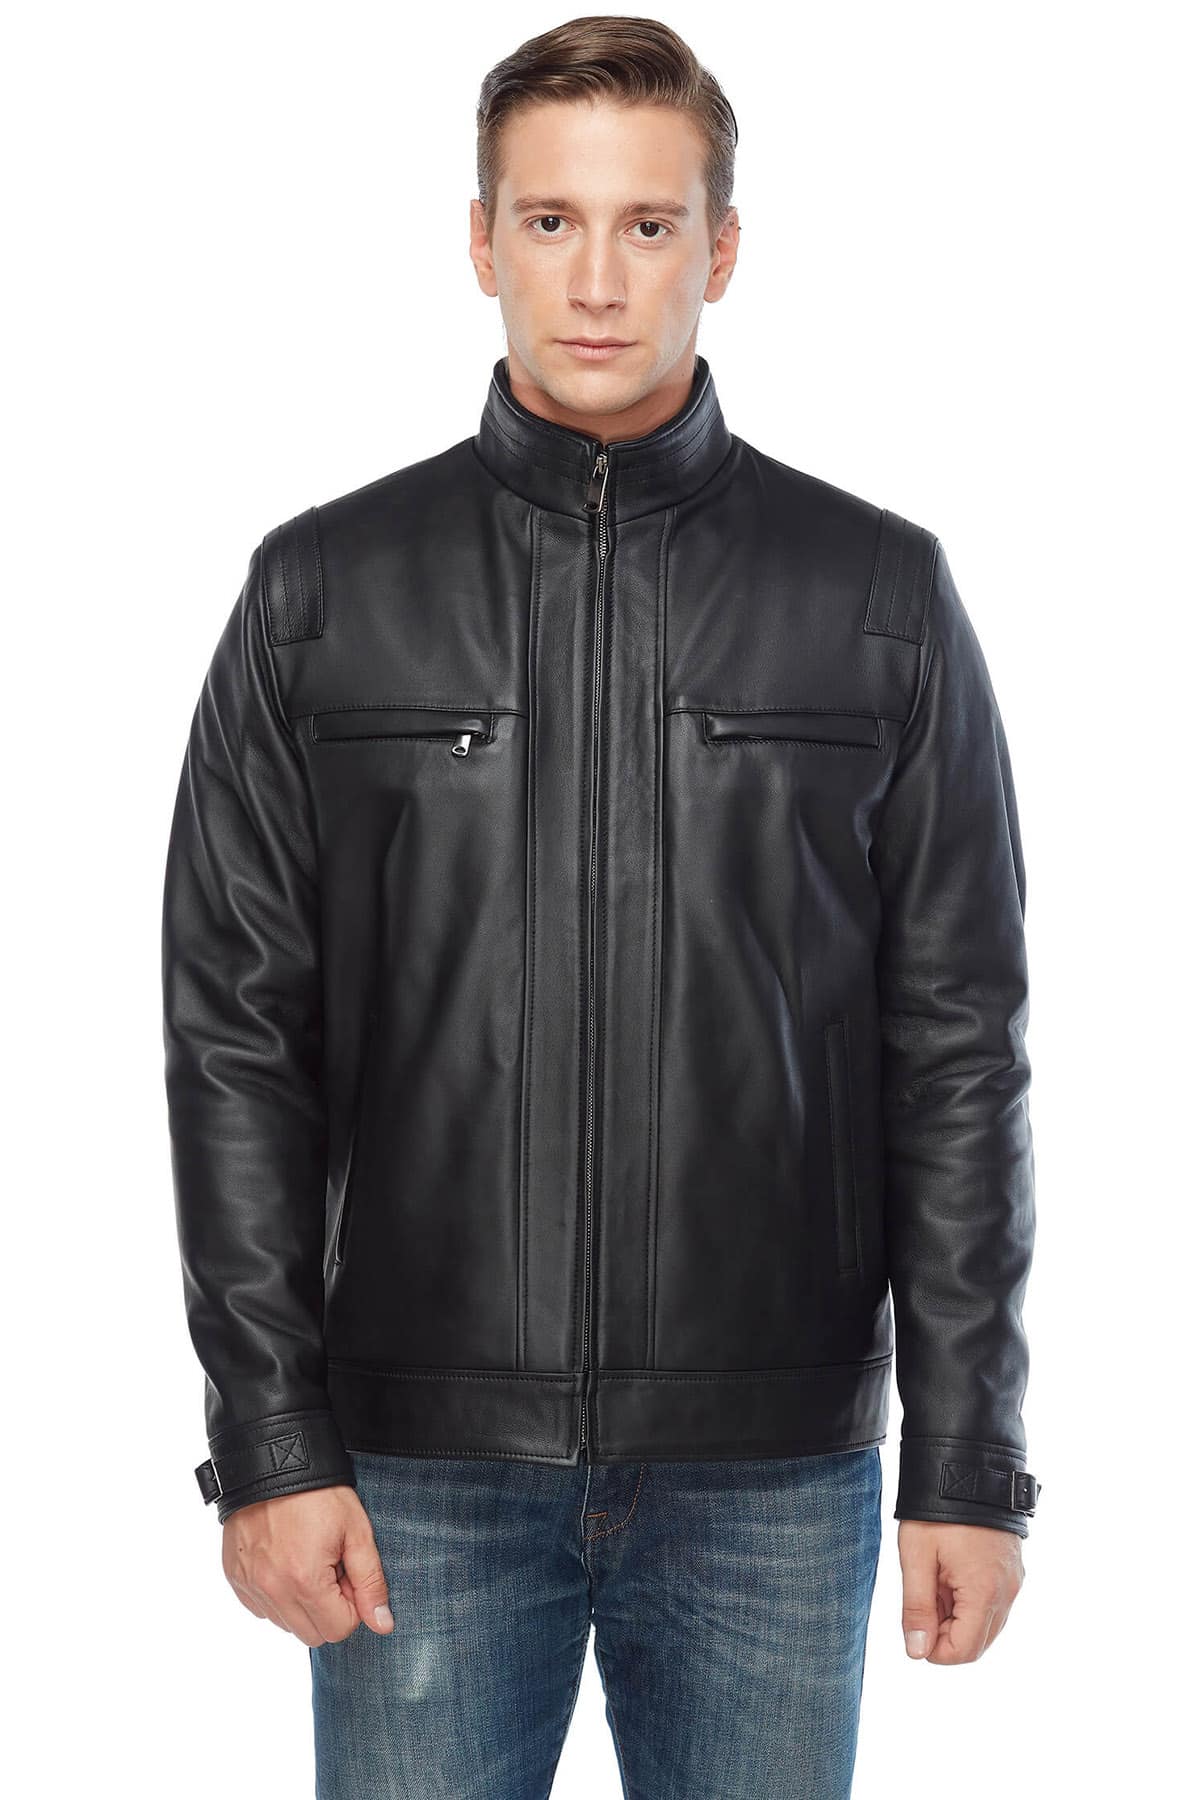 Jesse Wood Men’s Genuine Leather Coat Black2